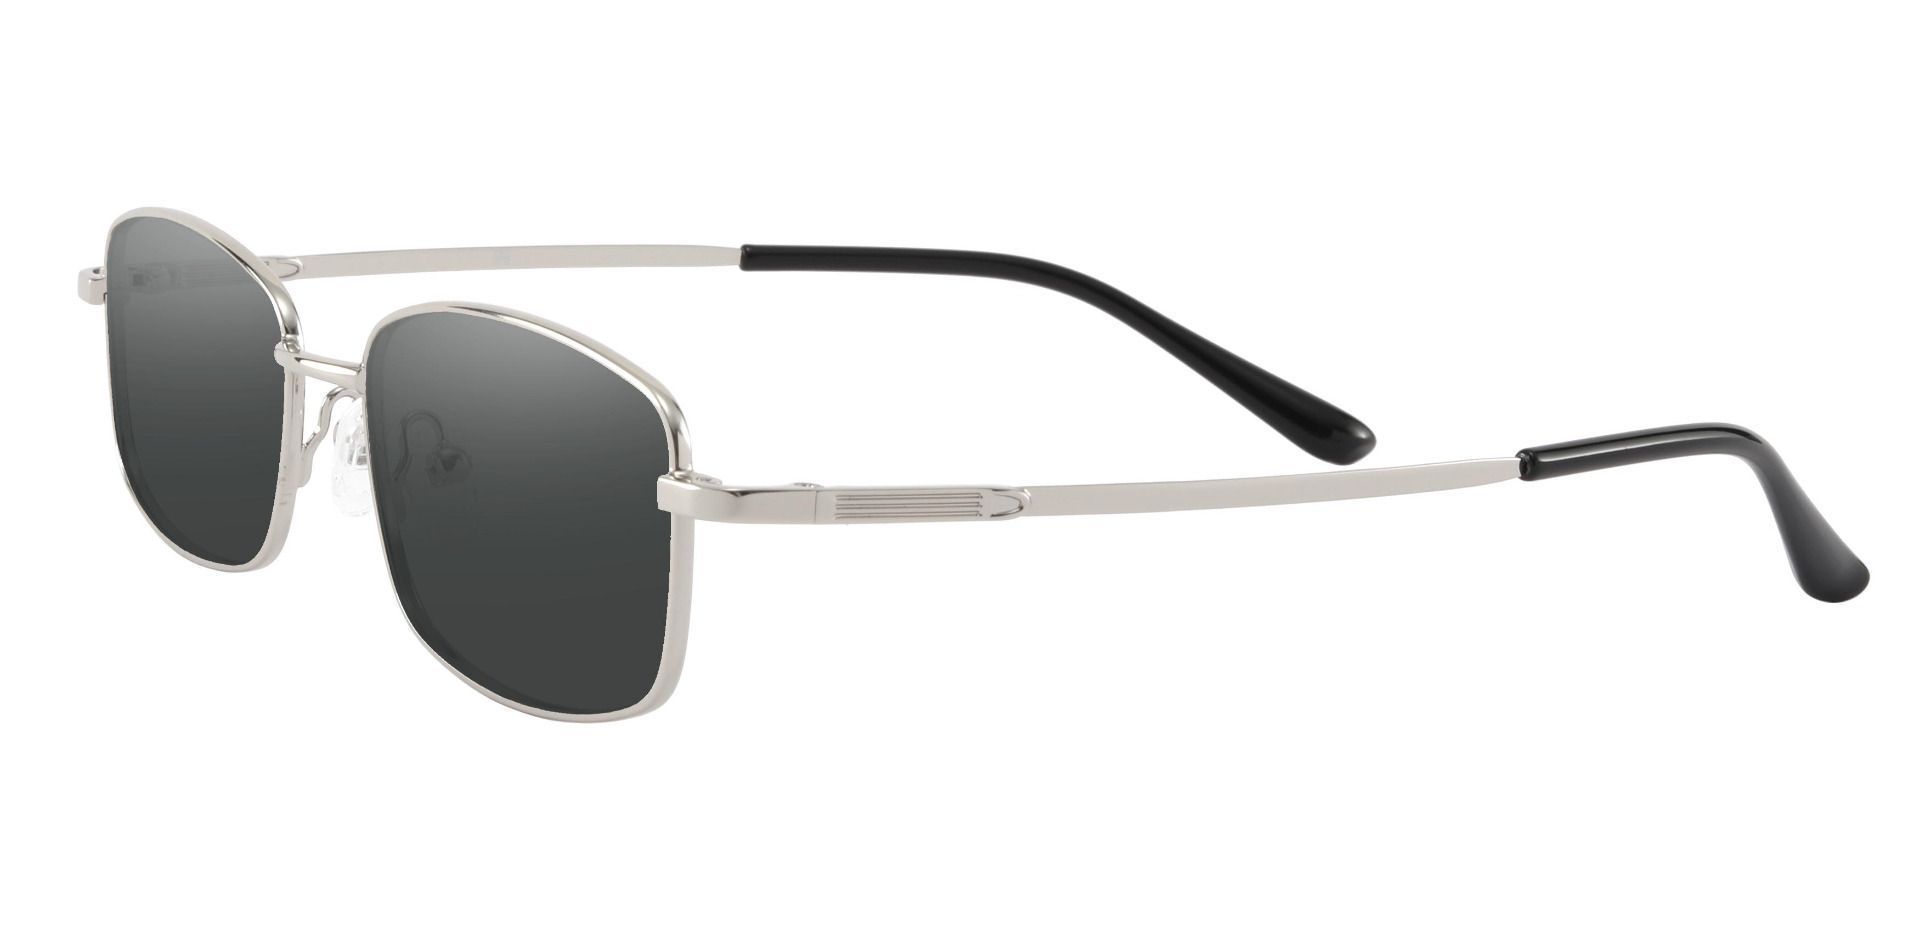 Hellman Rectangle Prescription Sunglasses - Silver Frame With Gray Lenses